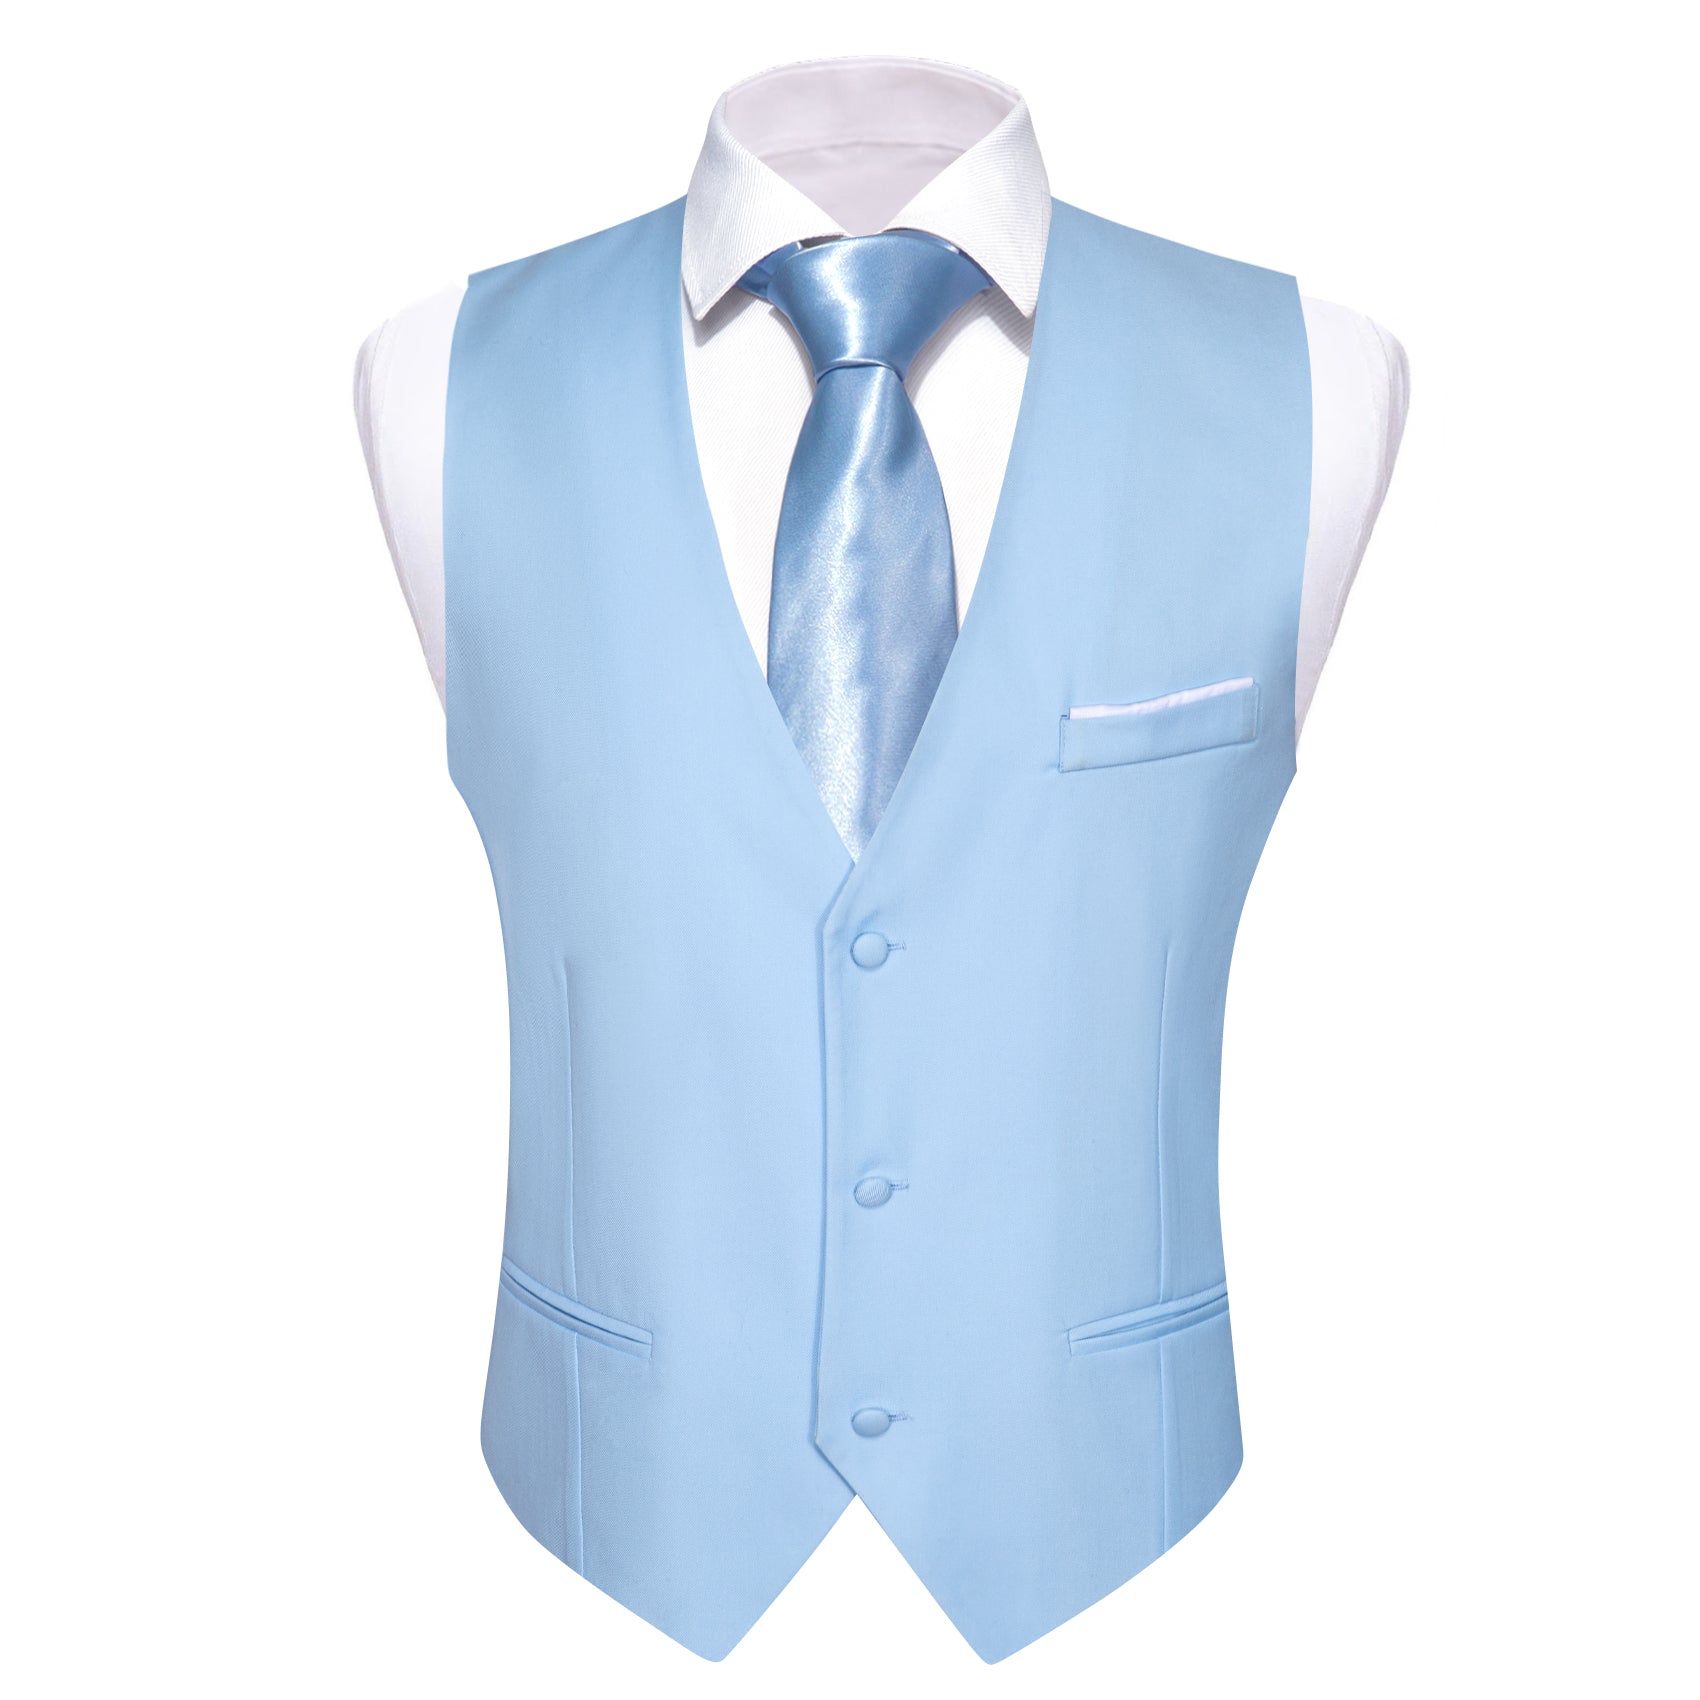 Barry.wang Men's Vest Light Blue Solid V-Neck Waistcoat Vest for Business